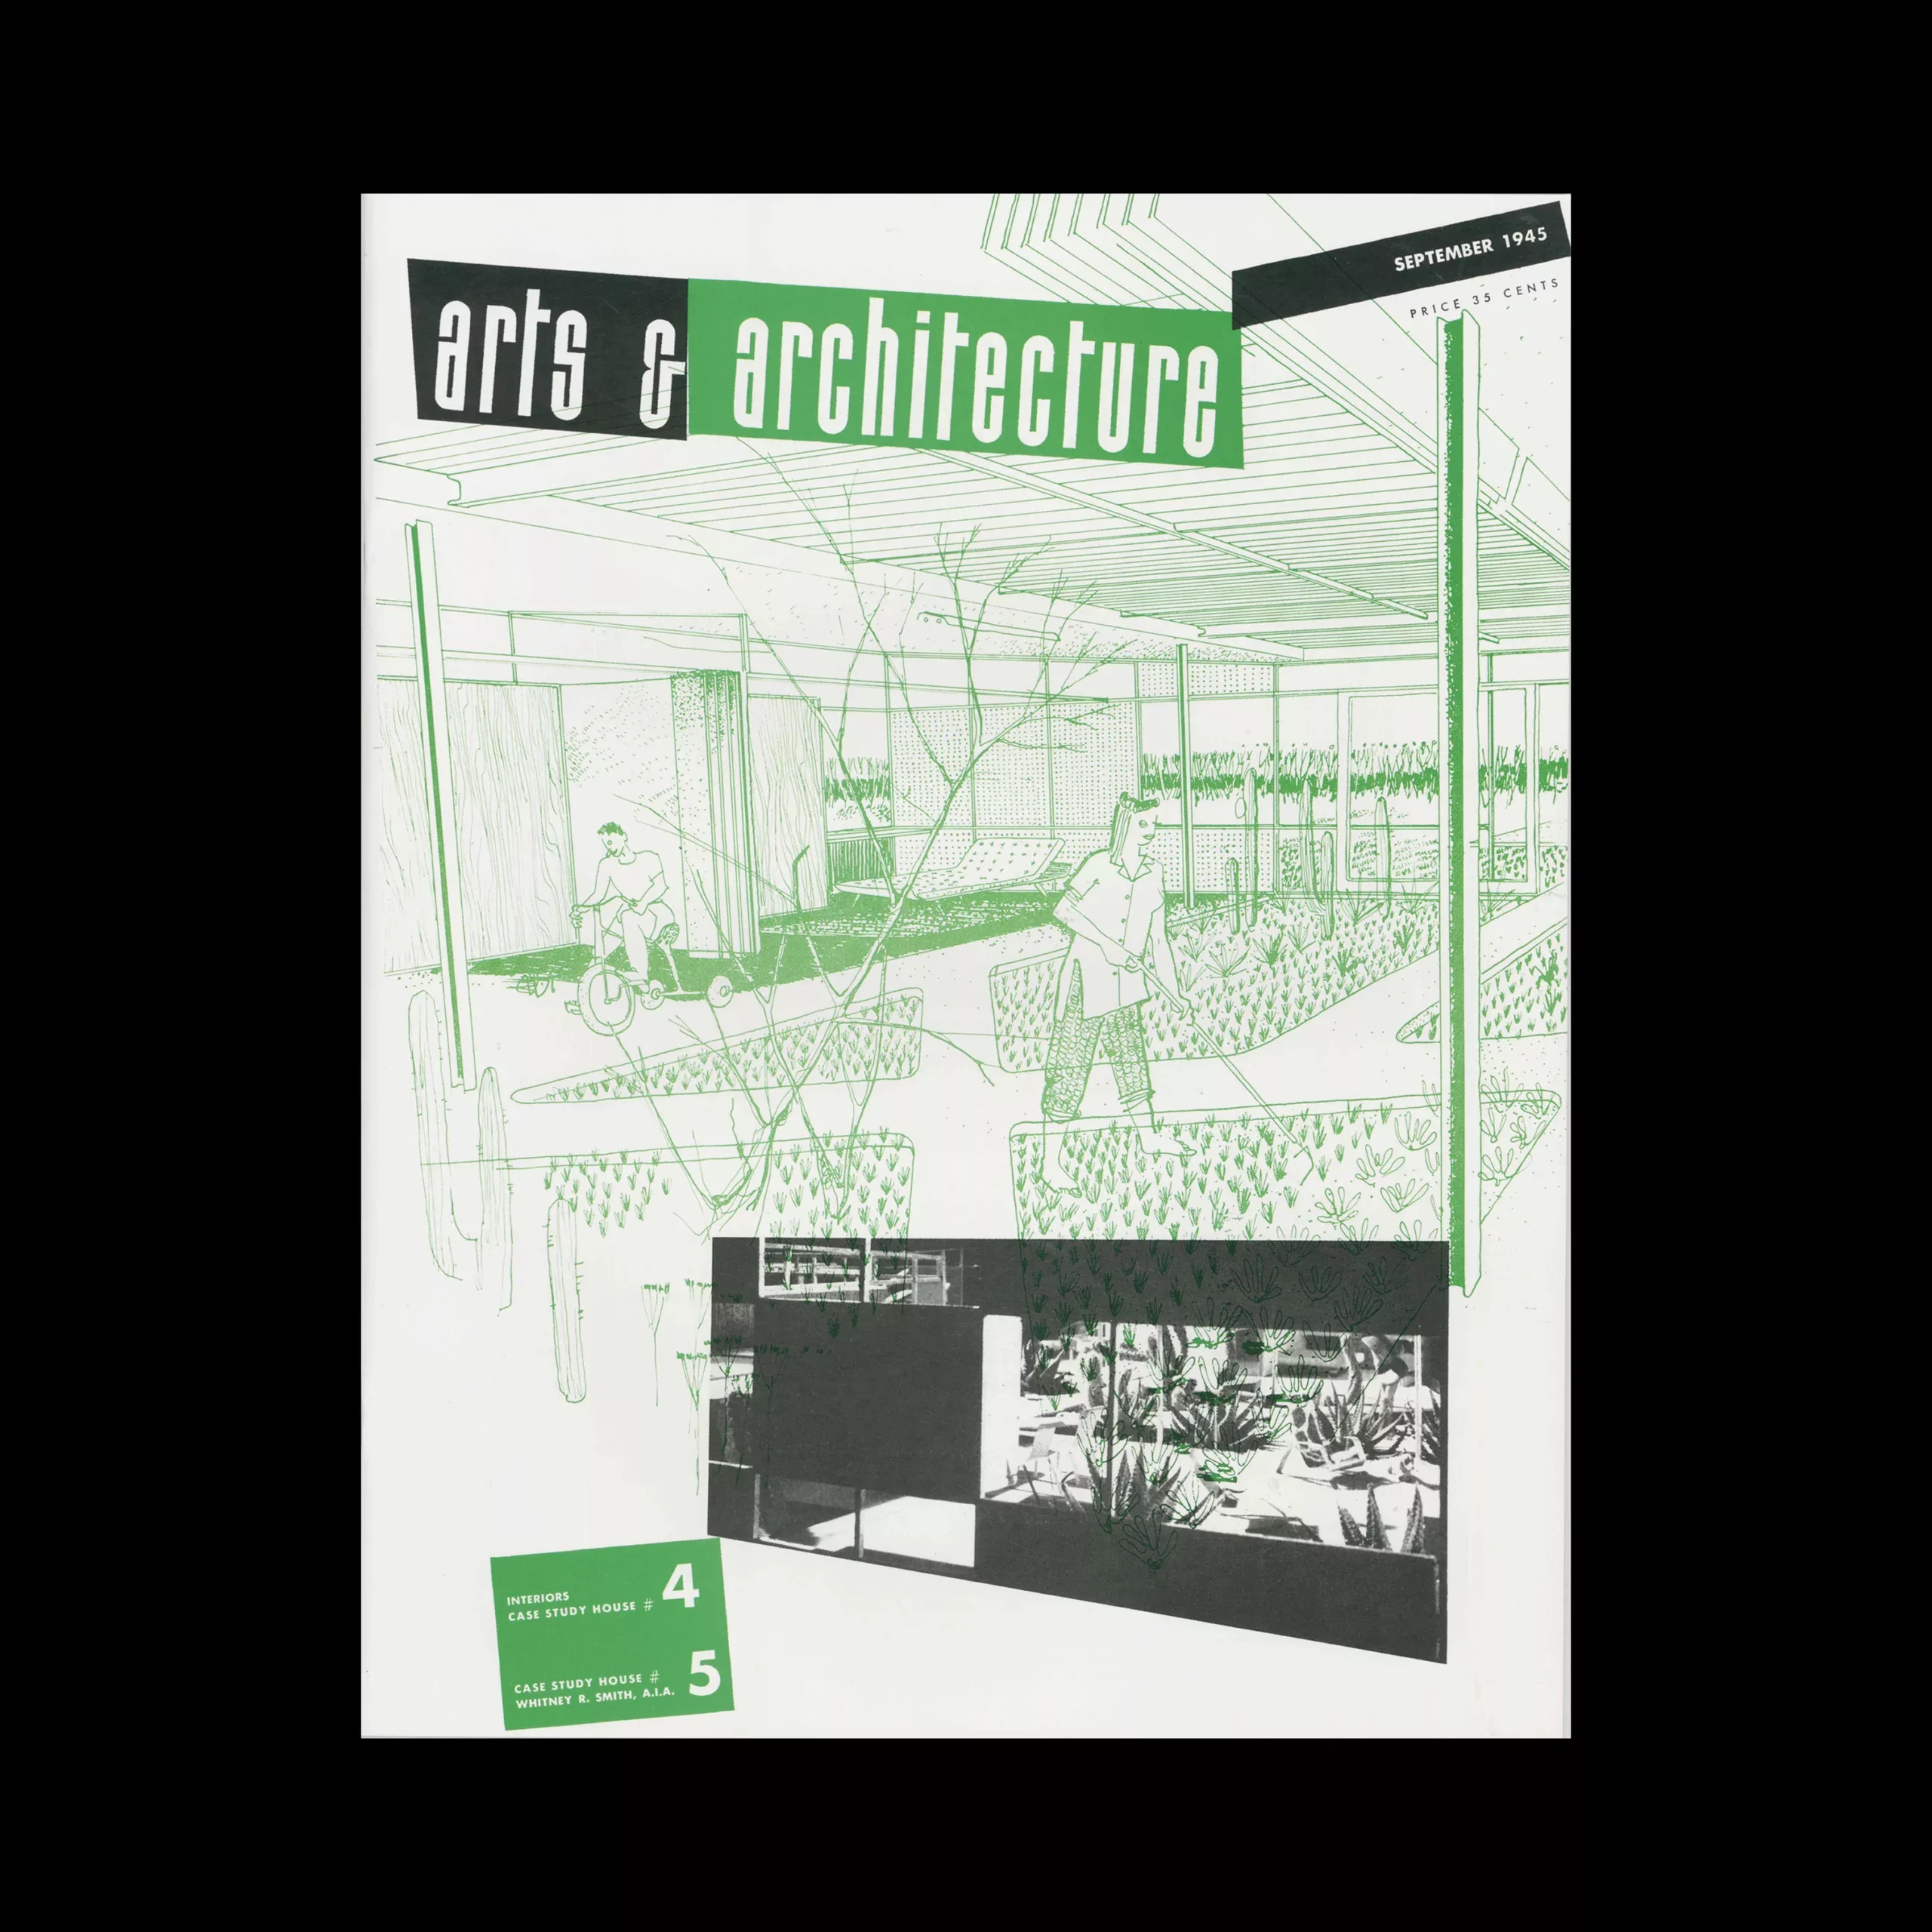 Arts & Architecture September 1945, Complete Reprint, Taschen, 2008. Cover design by Herbert Matter